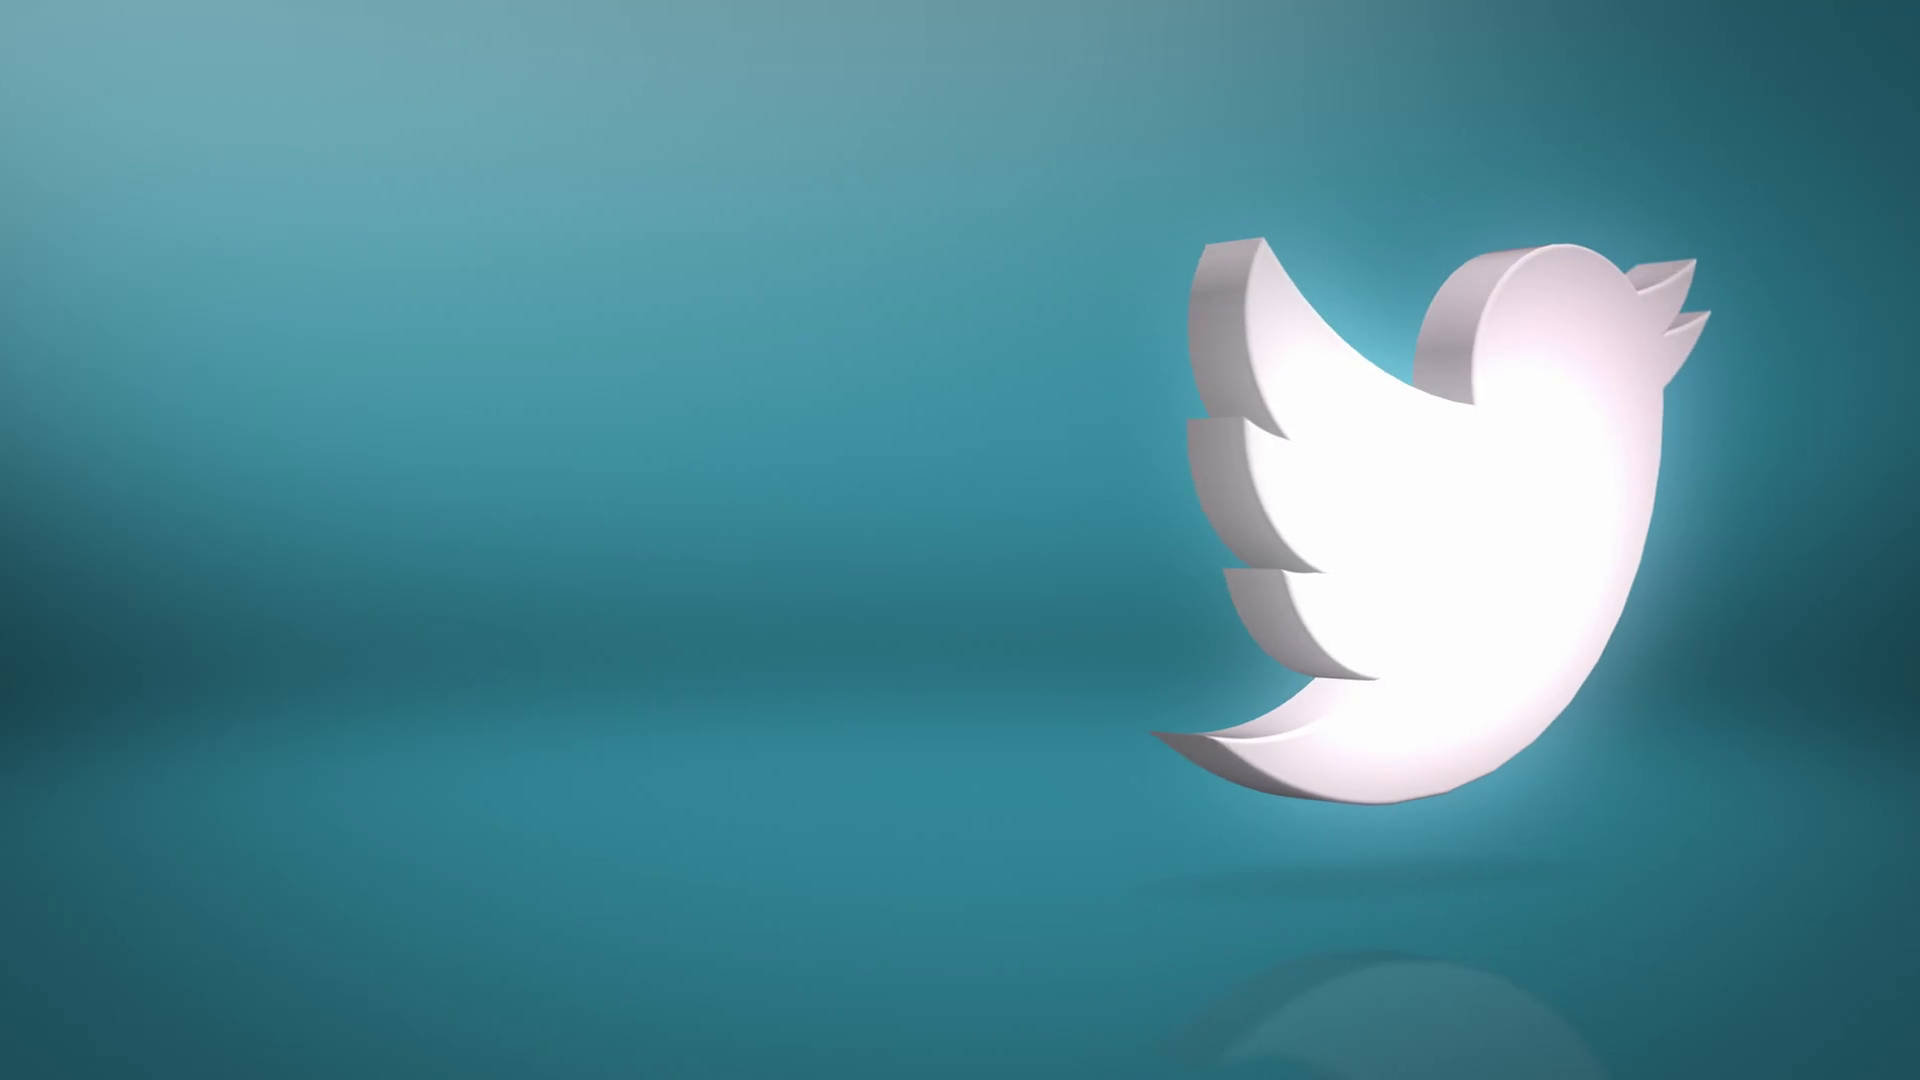 3d Twitter Logo